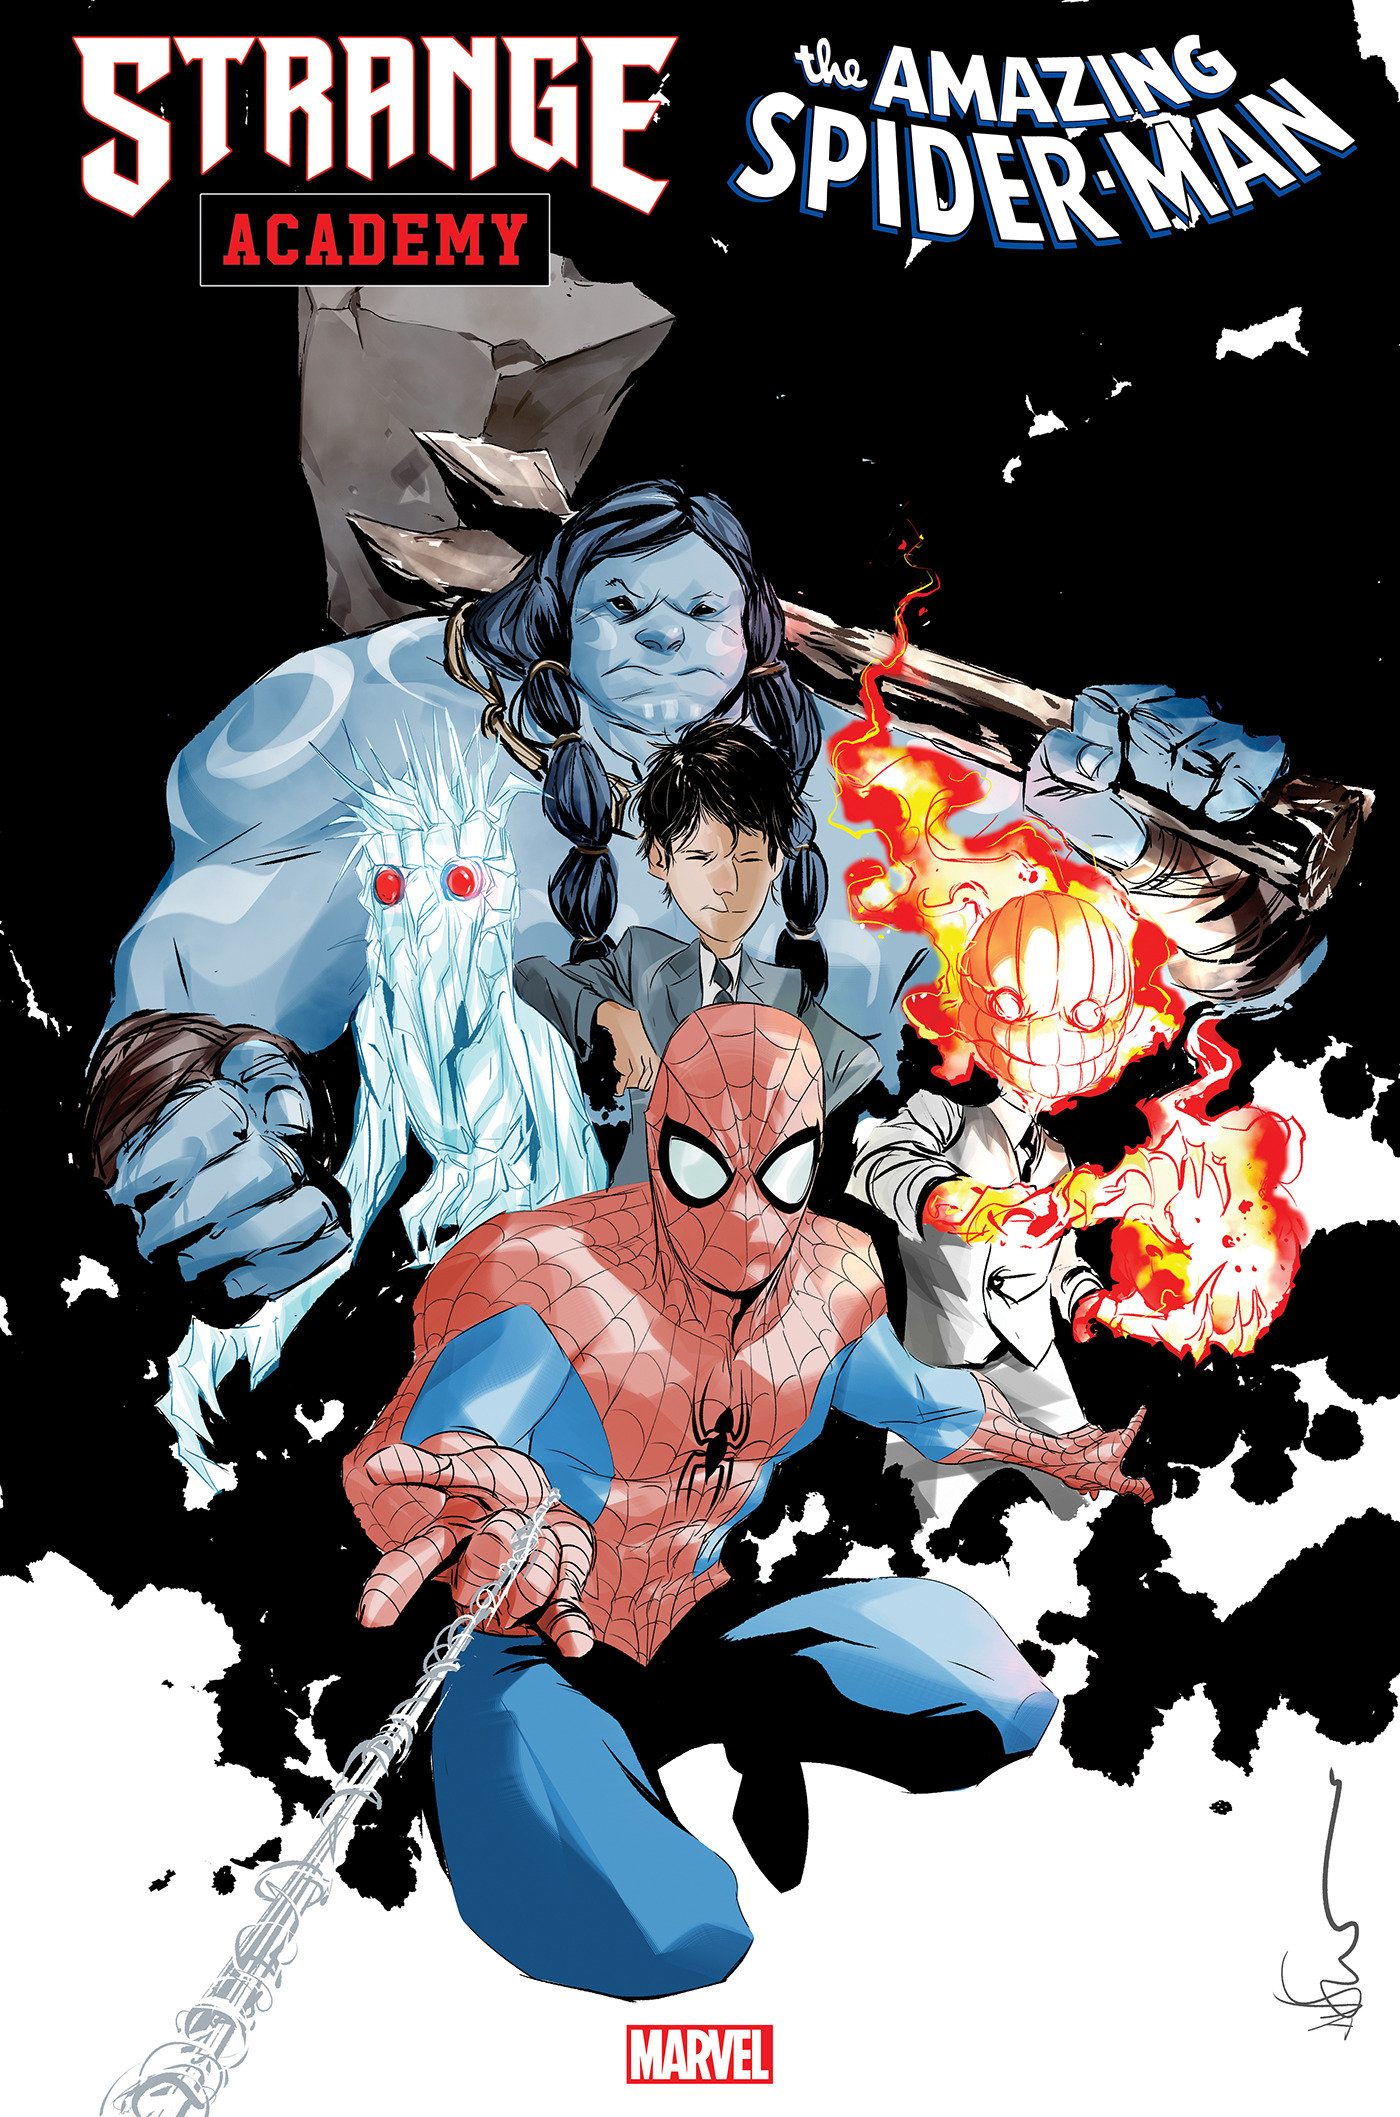 Strange Academy: Amazing Spider-Man #1 Dustin Nguyen 1 for 25 Incentive